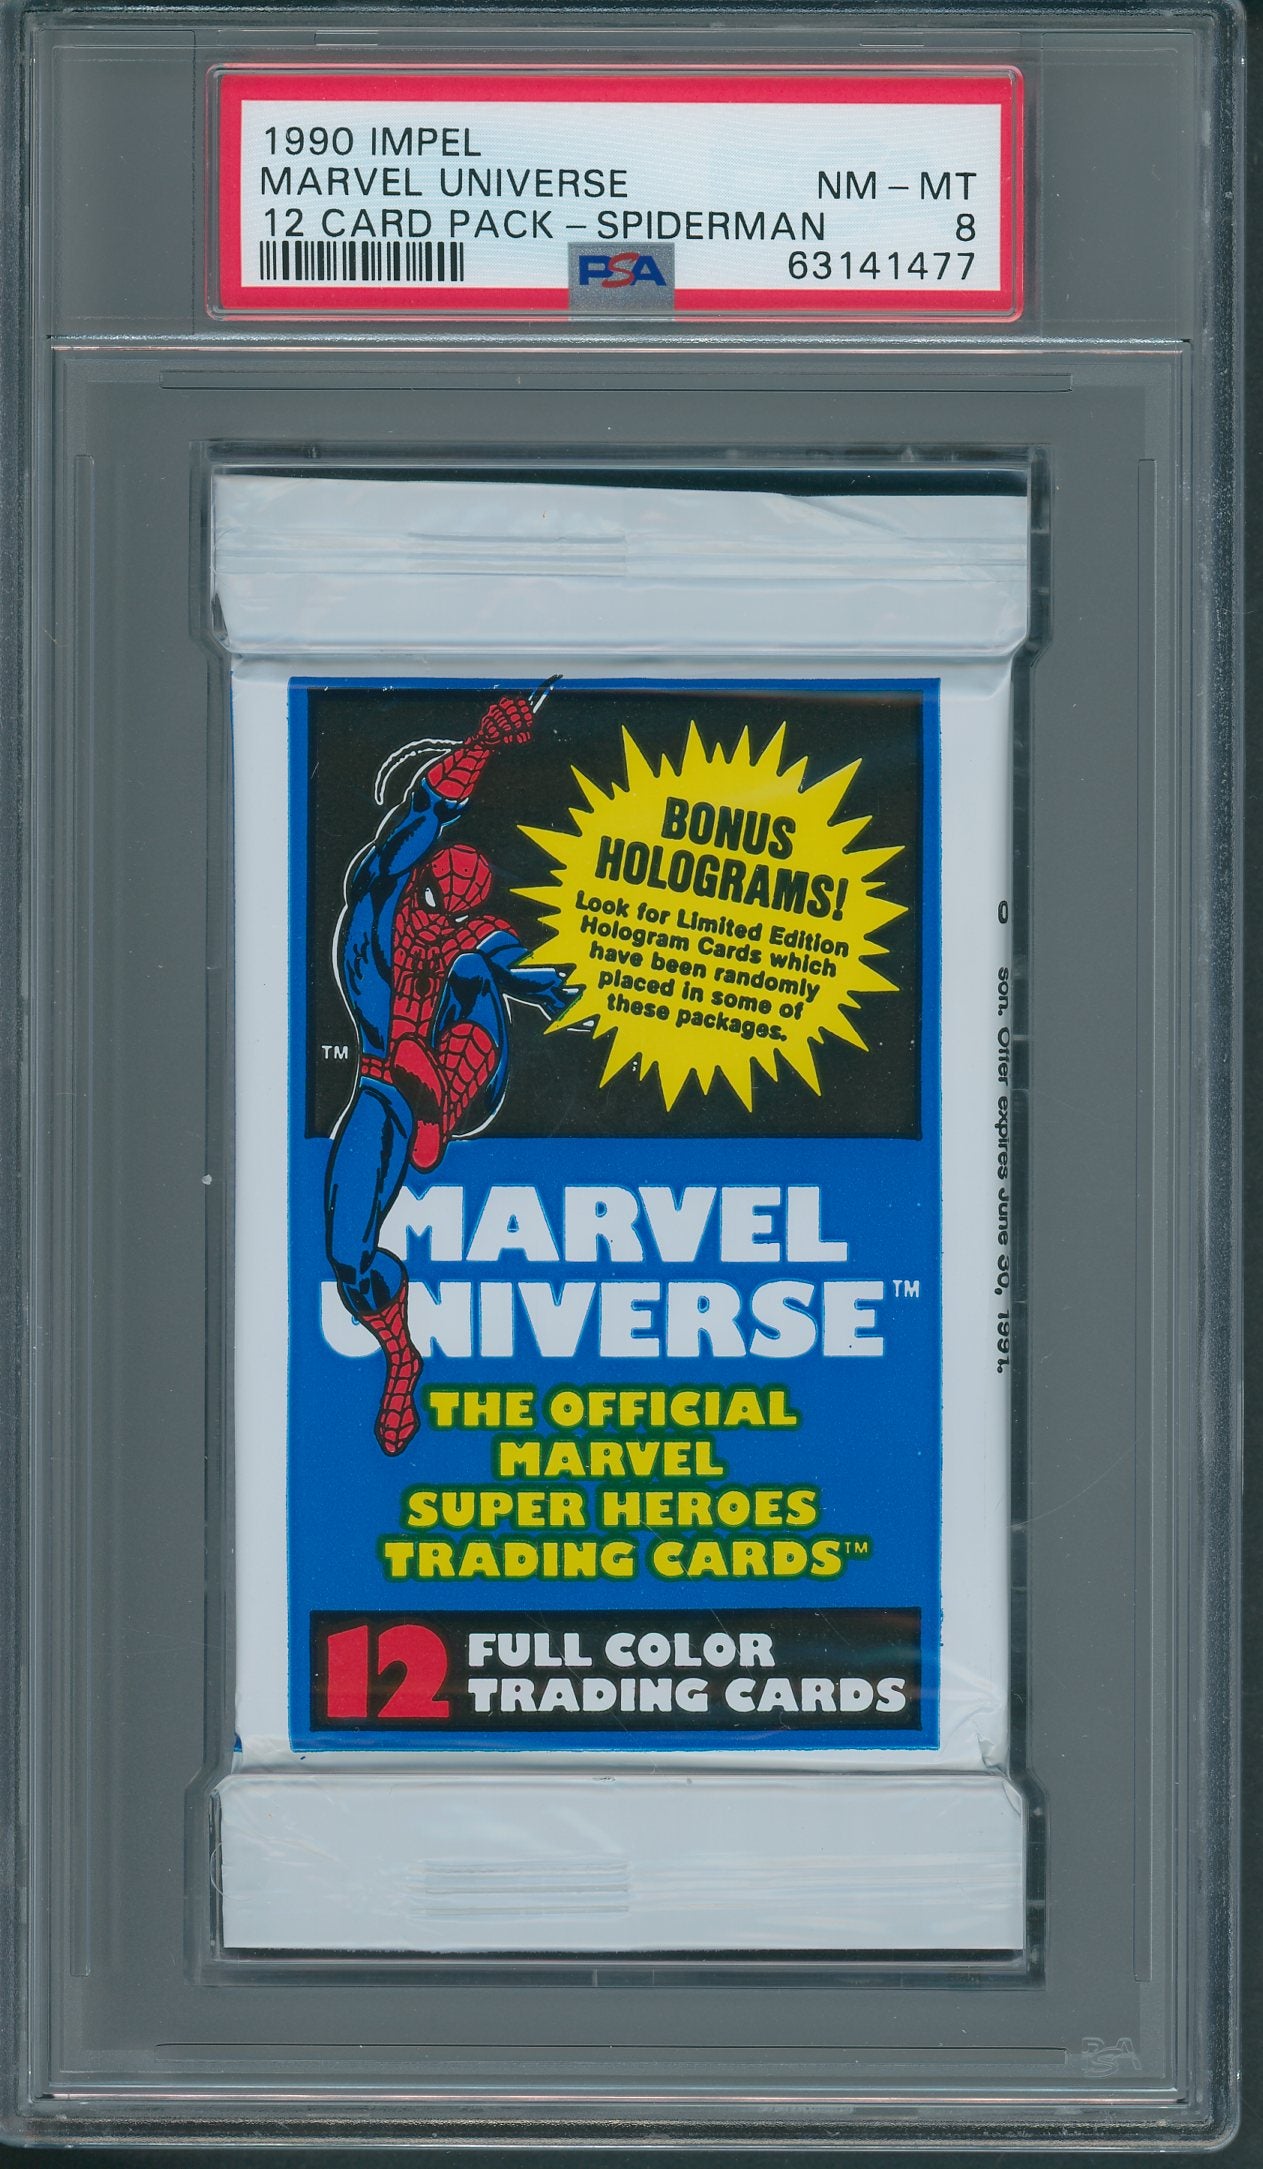 1990 Impel Marvel Universe Unopened Series 1 Pack Spiderman PSA 8